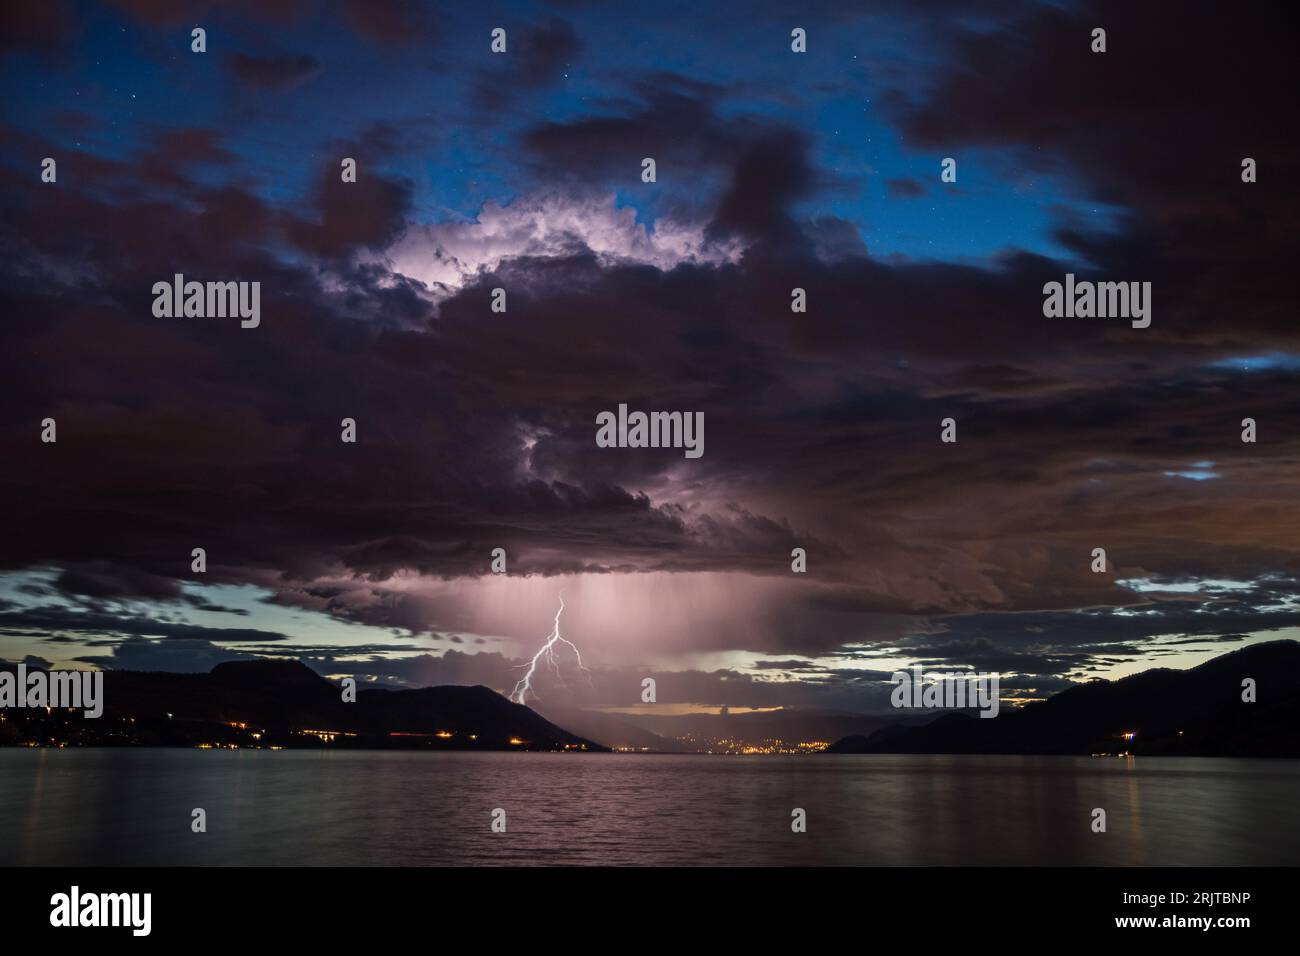 A stunning shot of a lightning storm over Okanagan Lake, British Columbia, Canada Stock Photo